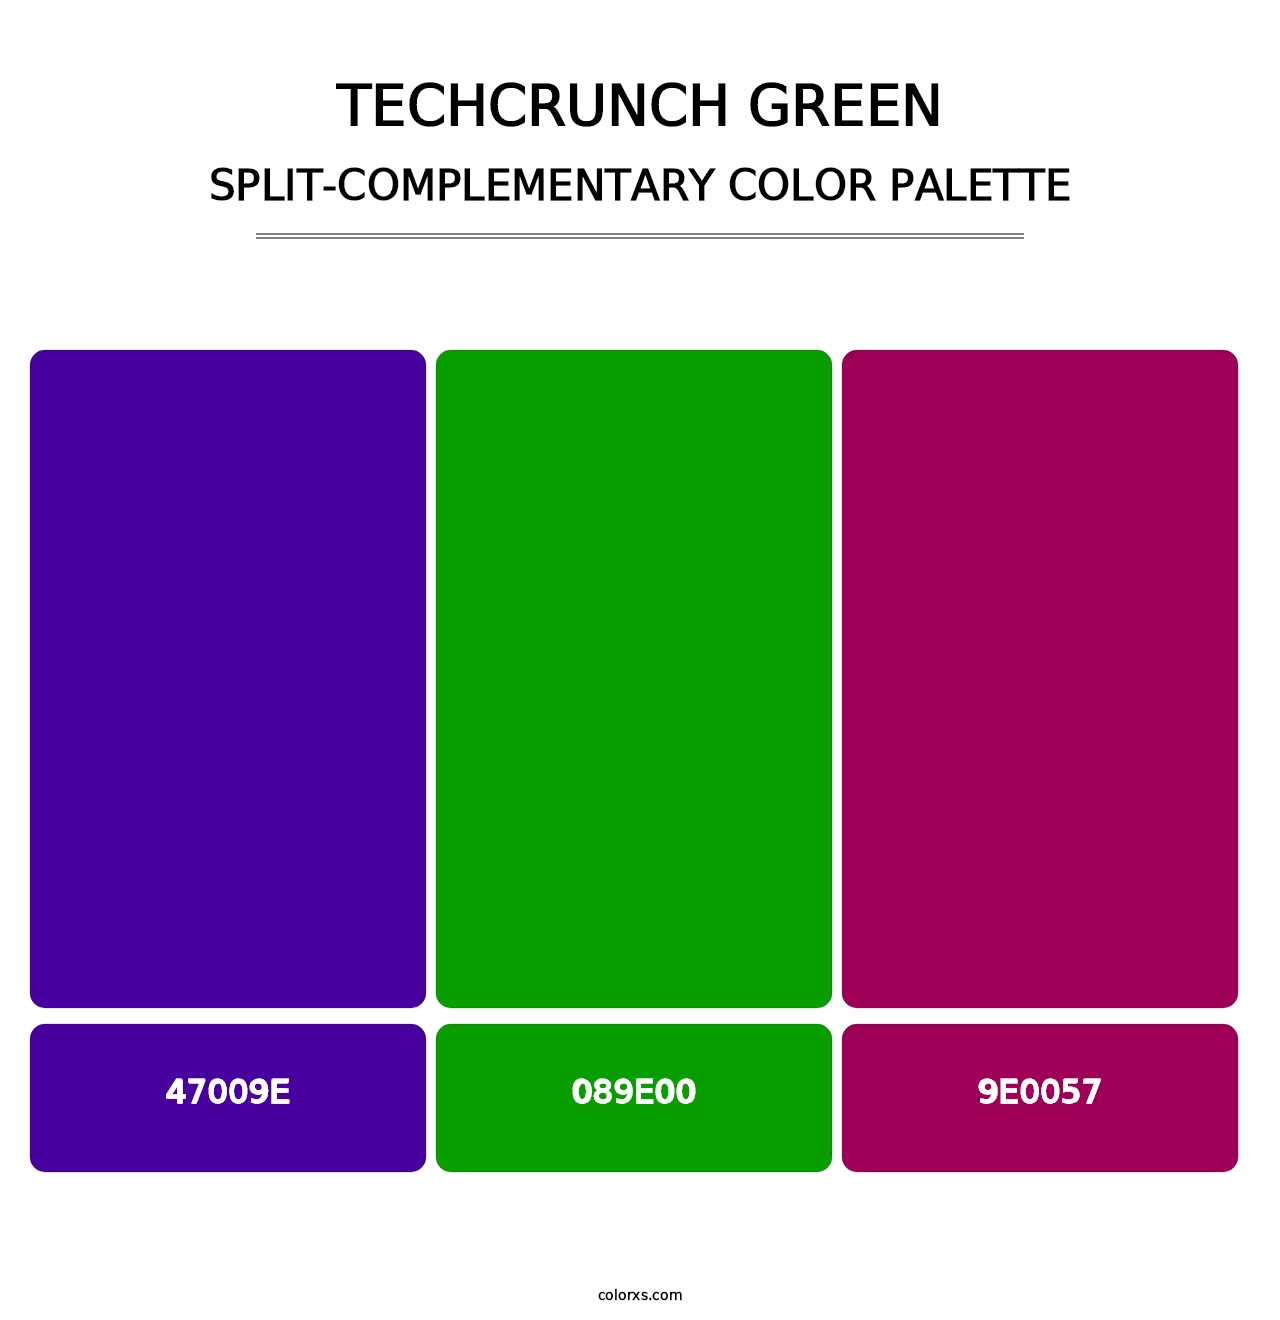 TechCrunch Green - Split-Complementary Color Palette